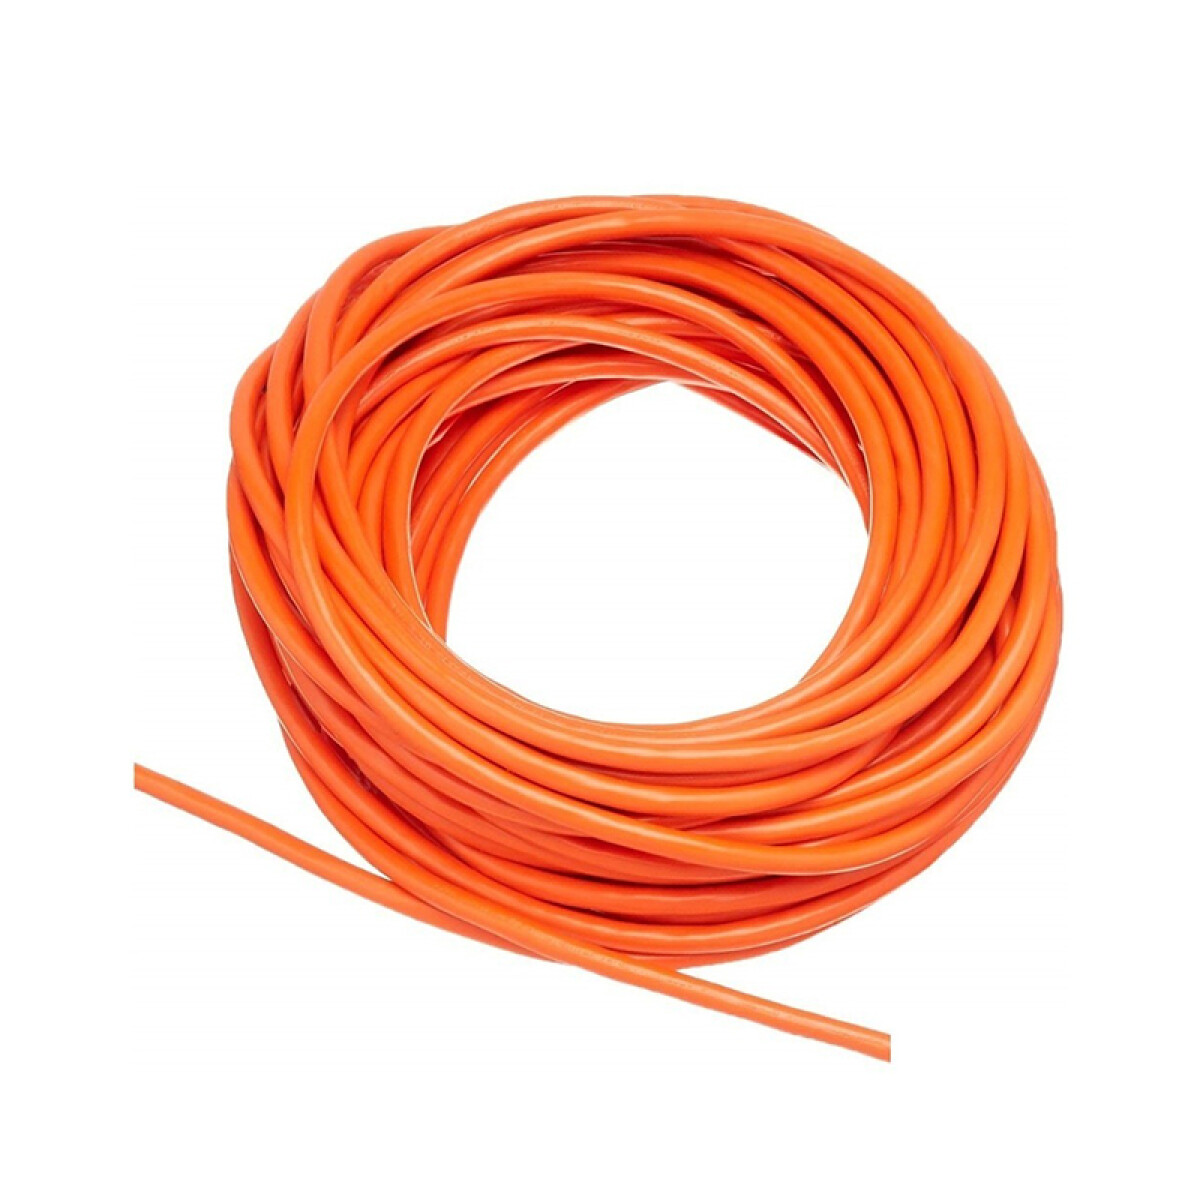 Cable PVC naranja 2x1mm² - Rollo 100 mts. - C95741 